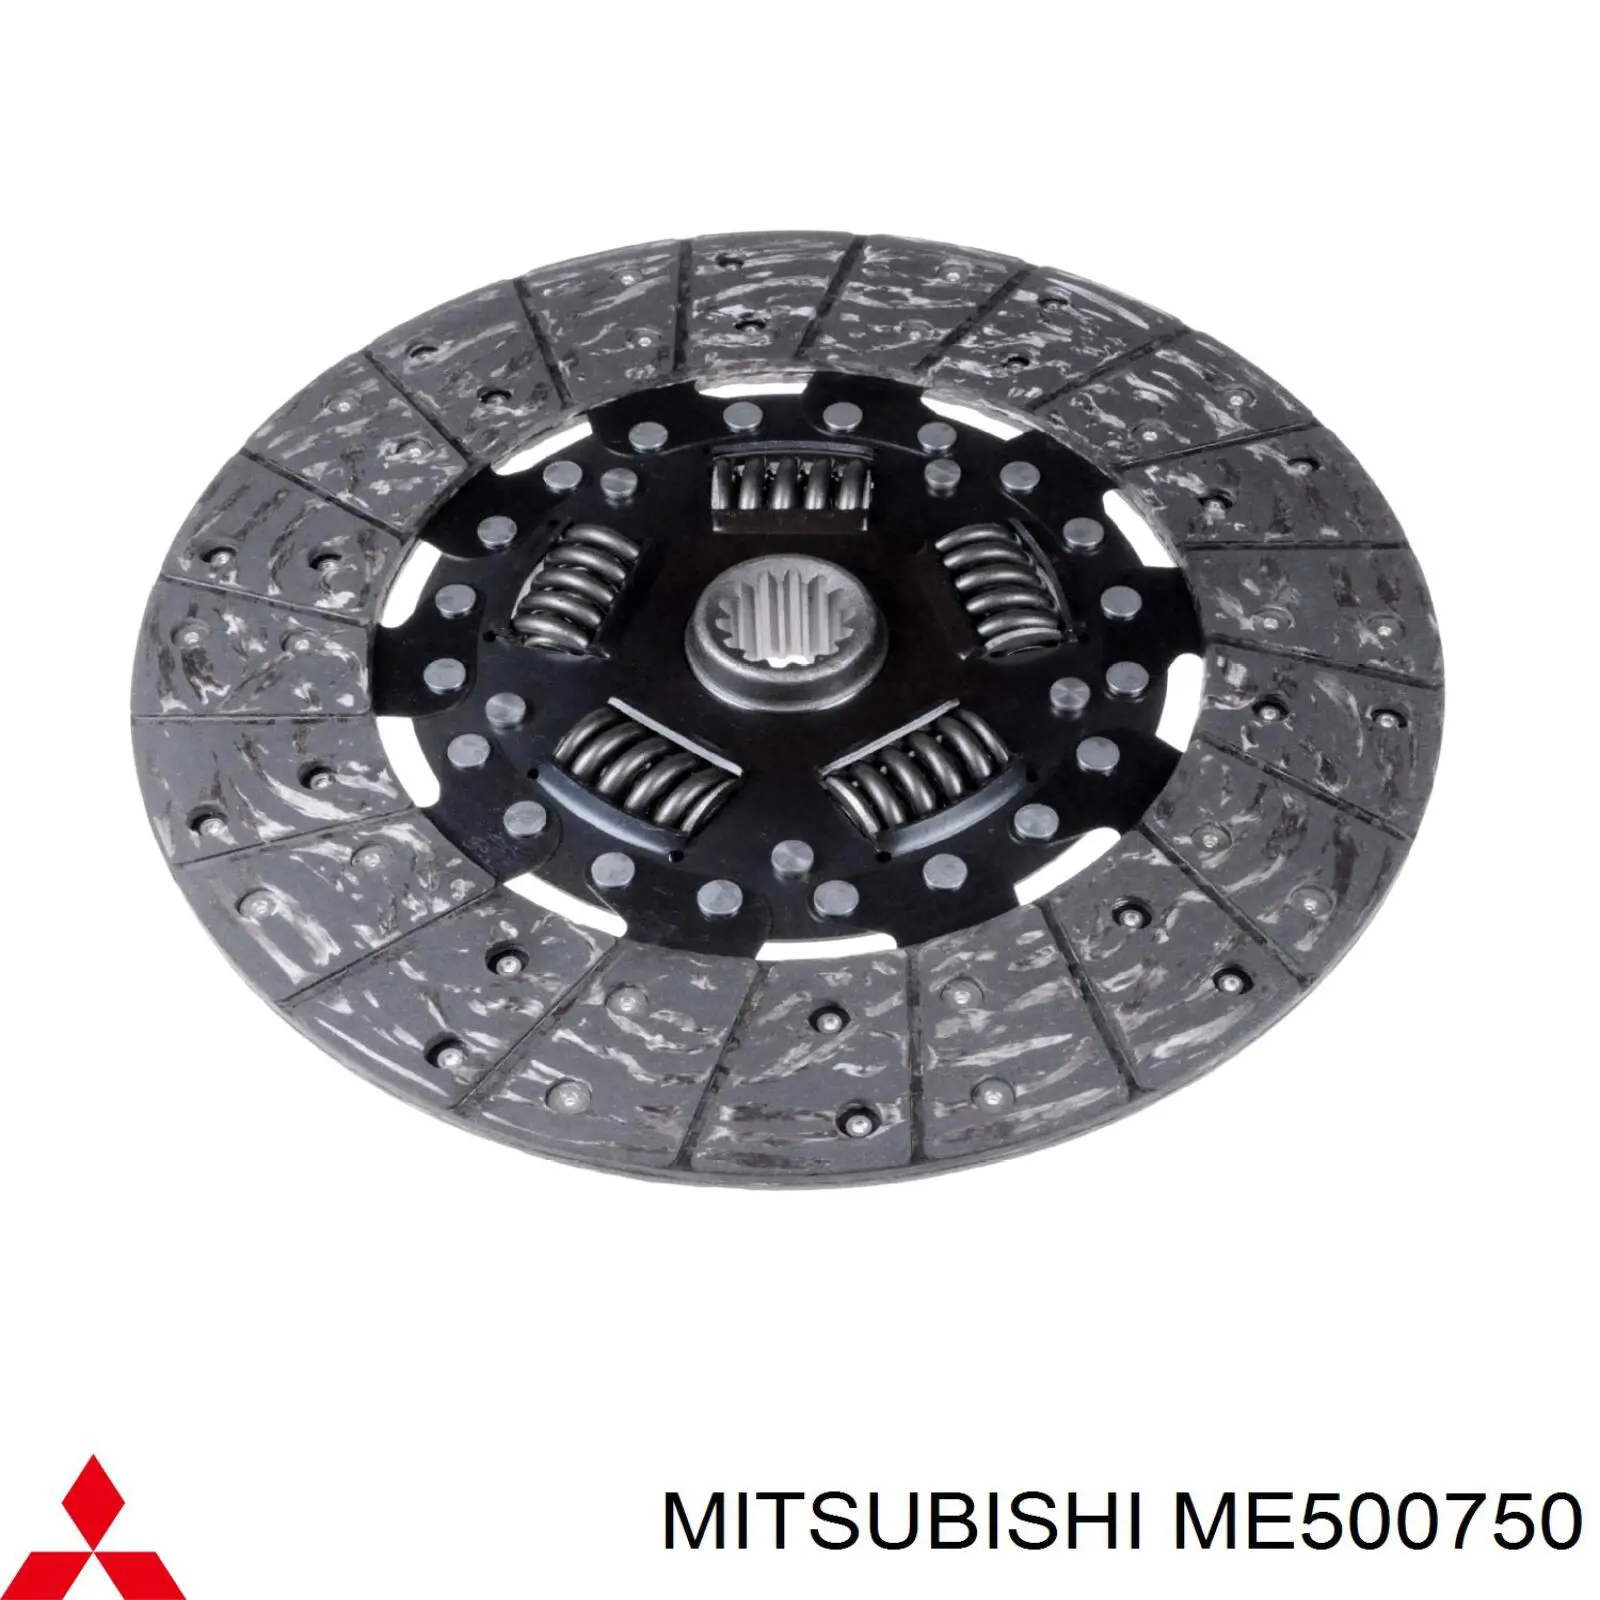 ME500395 Mitsubishi disco de embrague